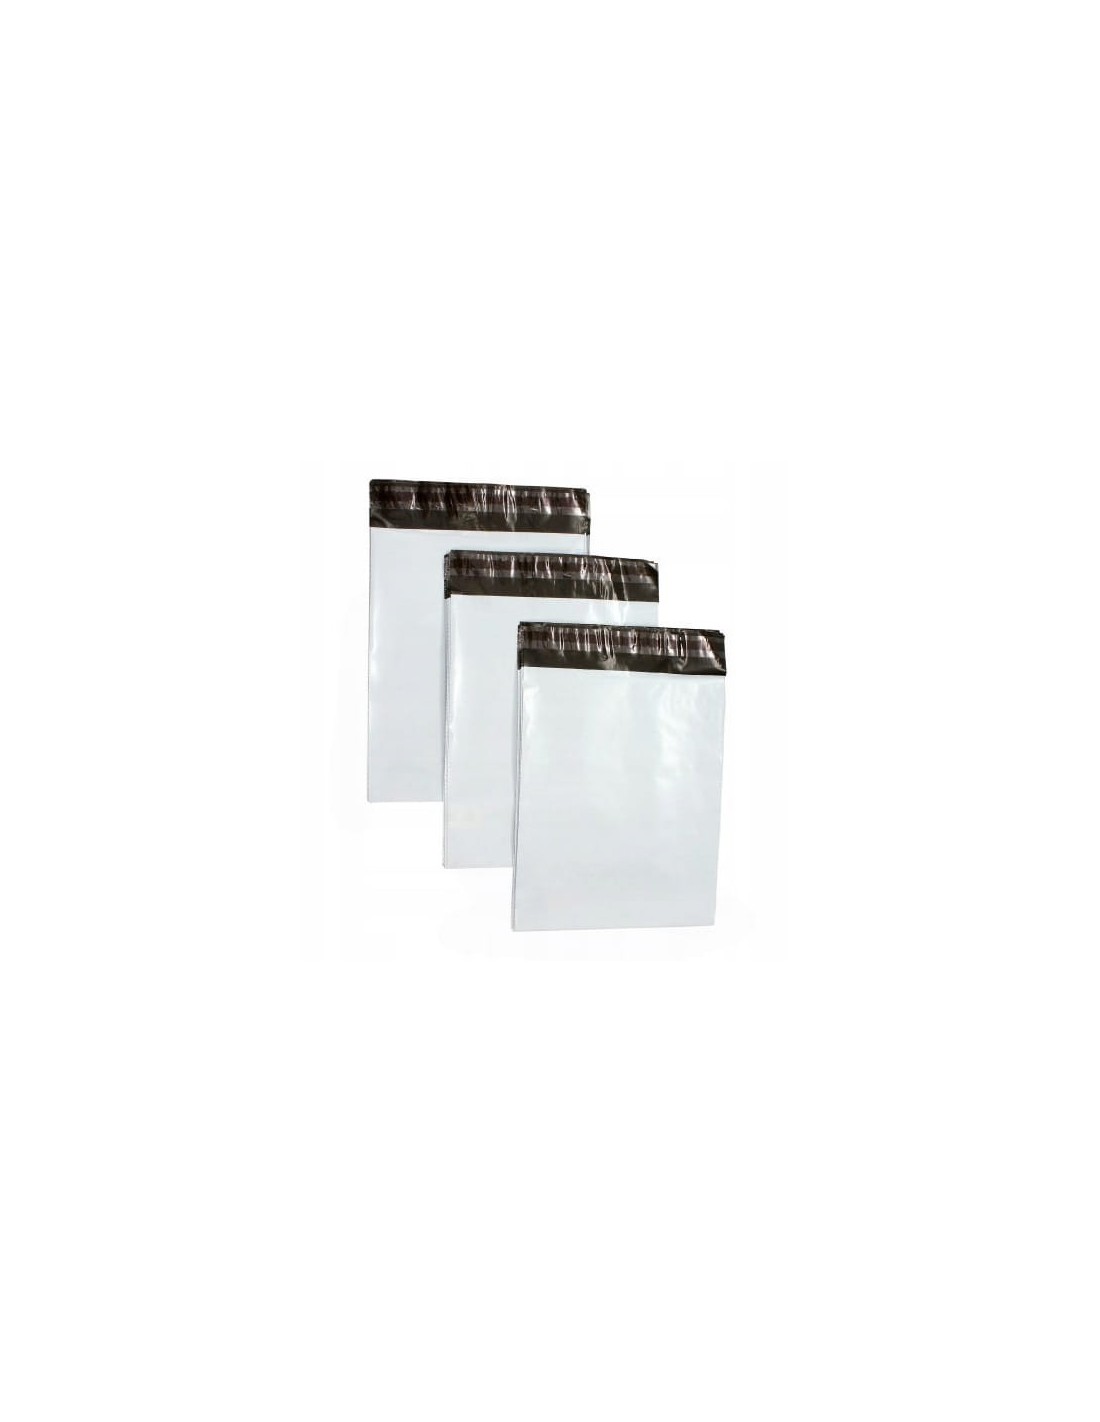 Pochette plastique opaque / Enveloppes opaques / webshopbags A4 - 2